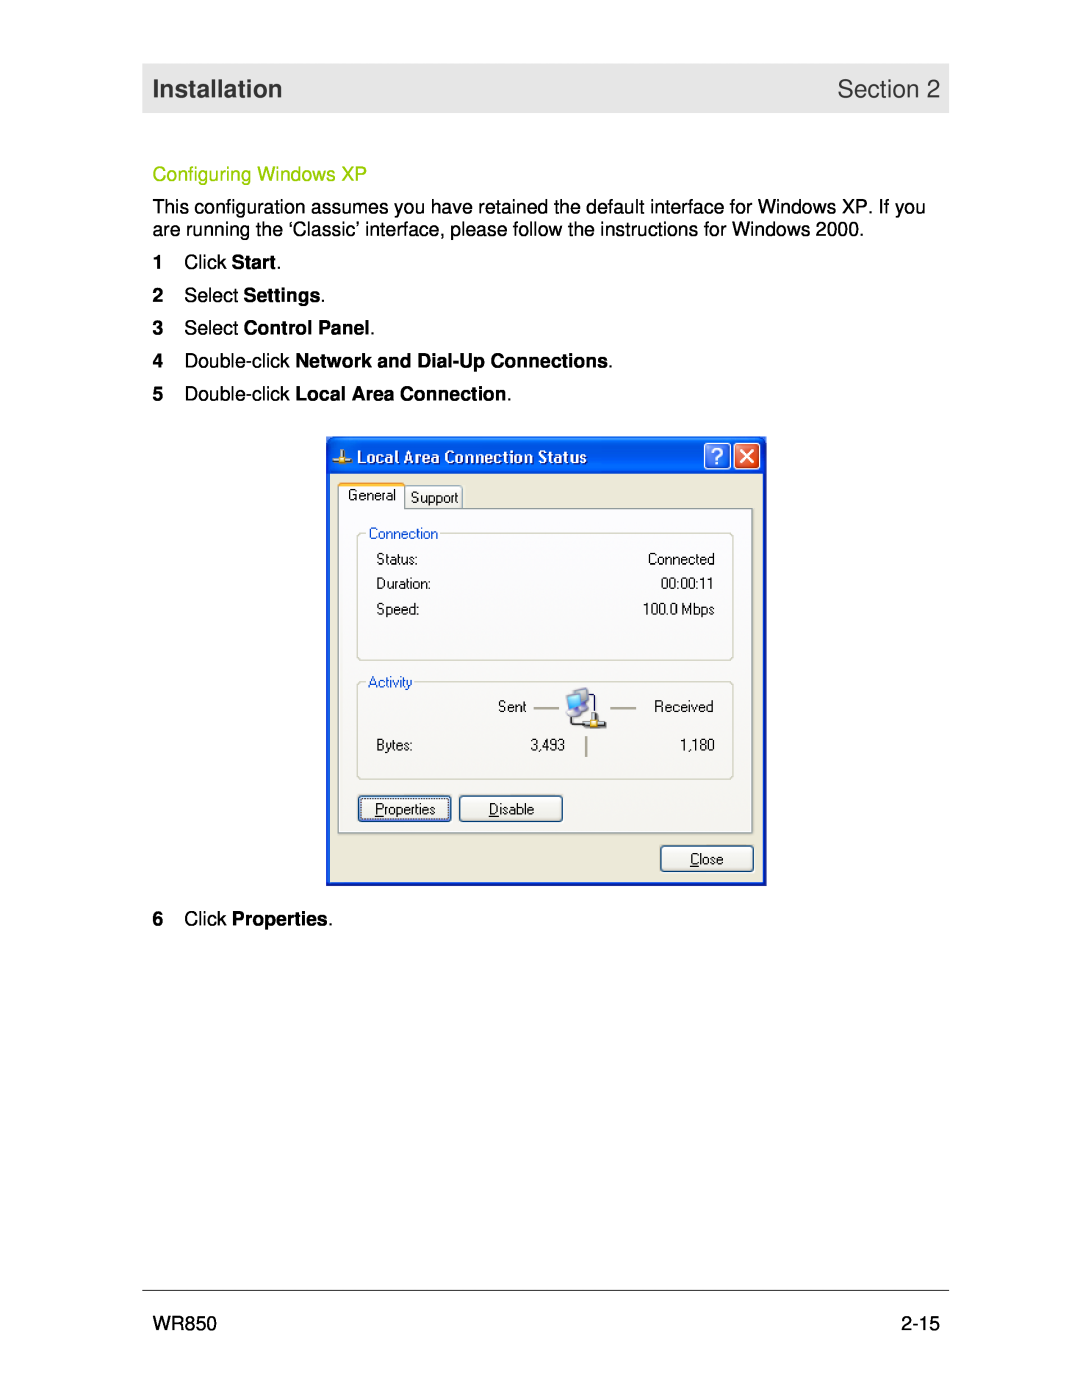 Motorola WR850 manual Configuring Windows XP, Installation, Section 